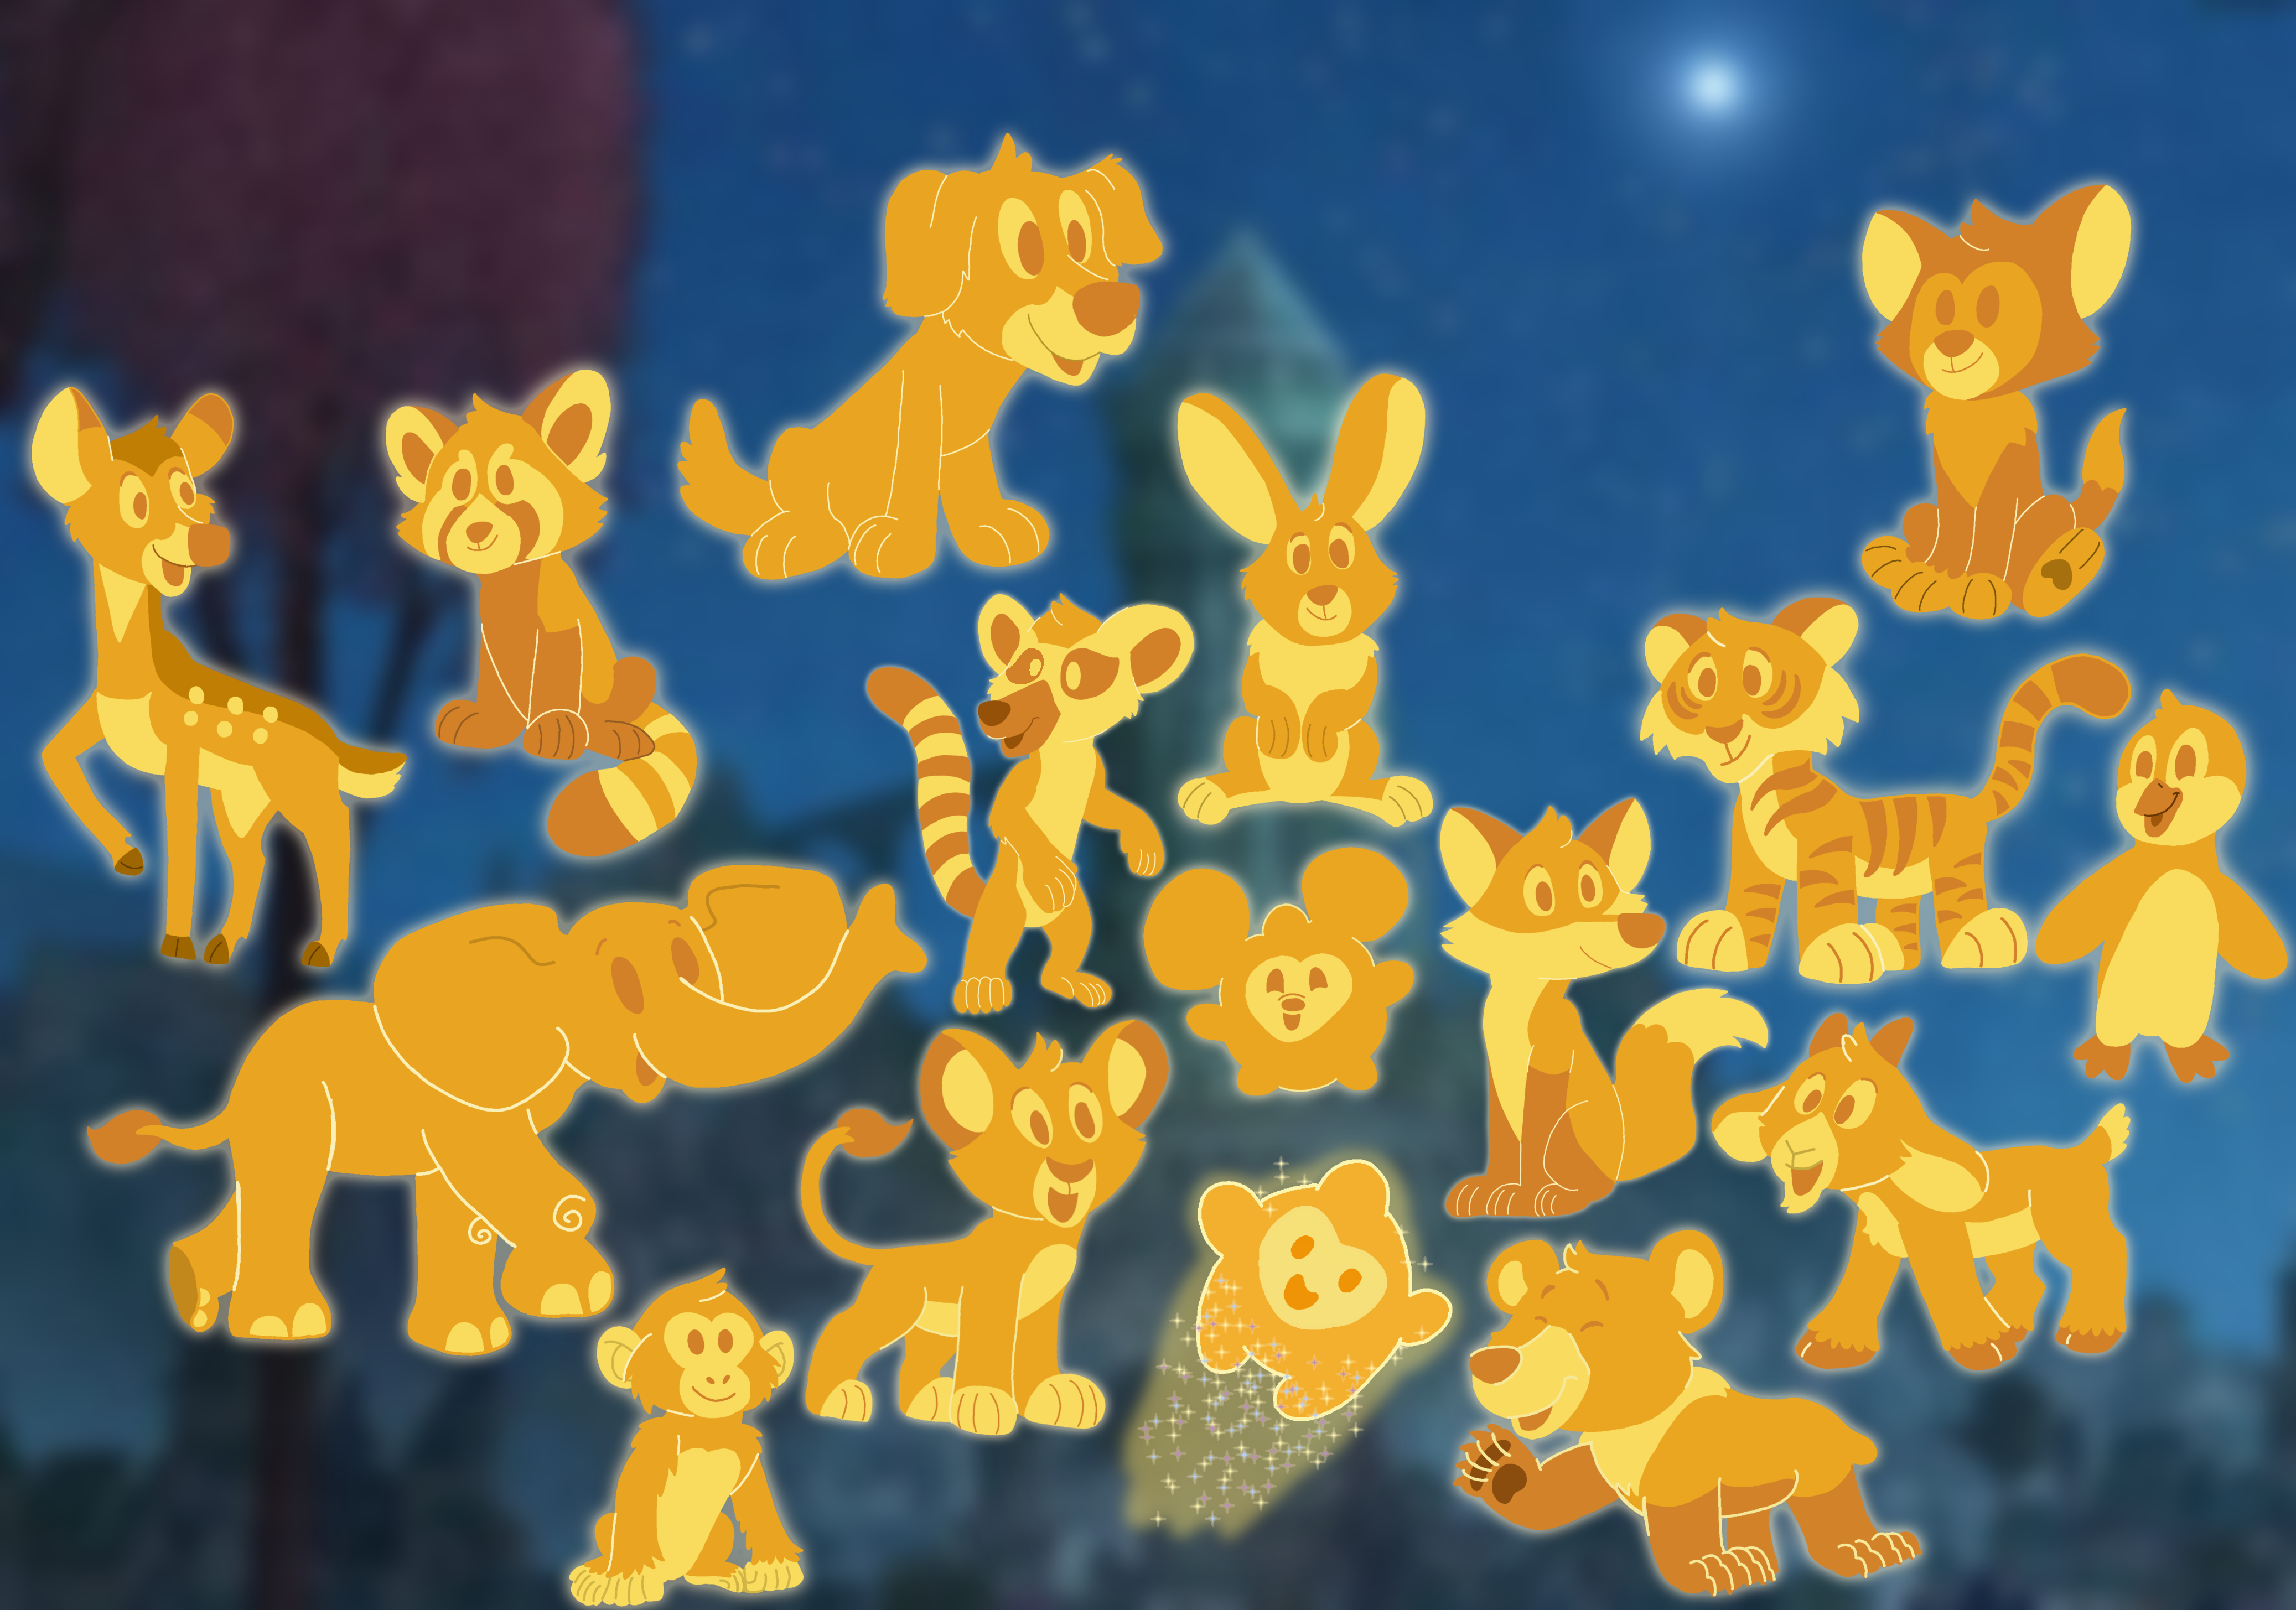 Disney's Wish: Star's Various Transformations by LionAdventuresArt on  DeviantArt